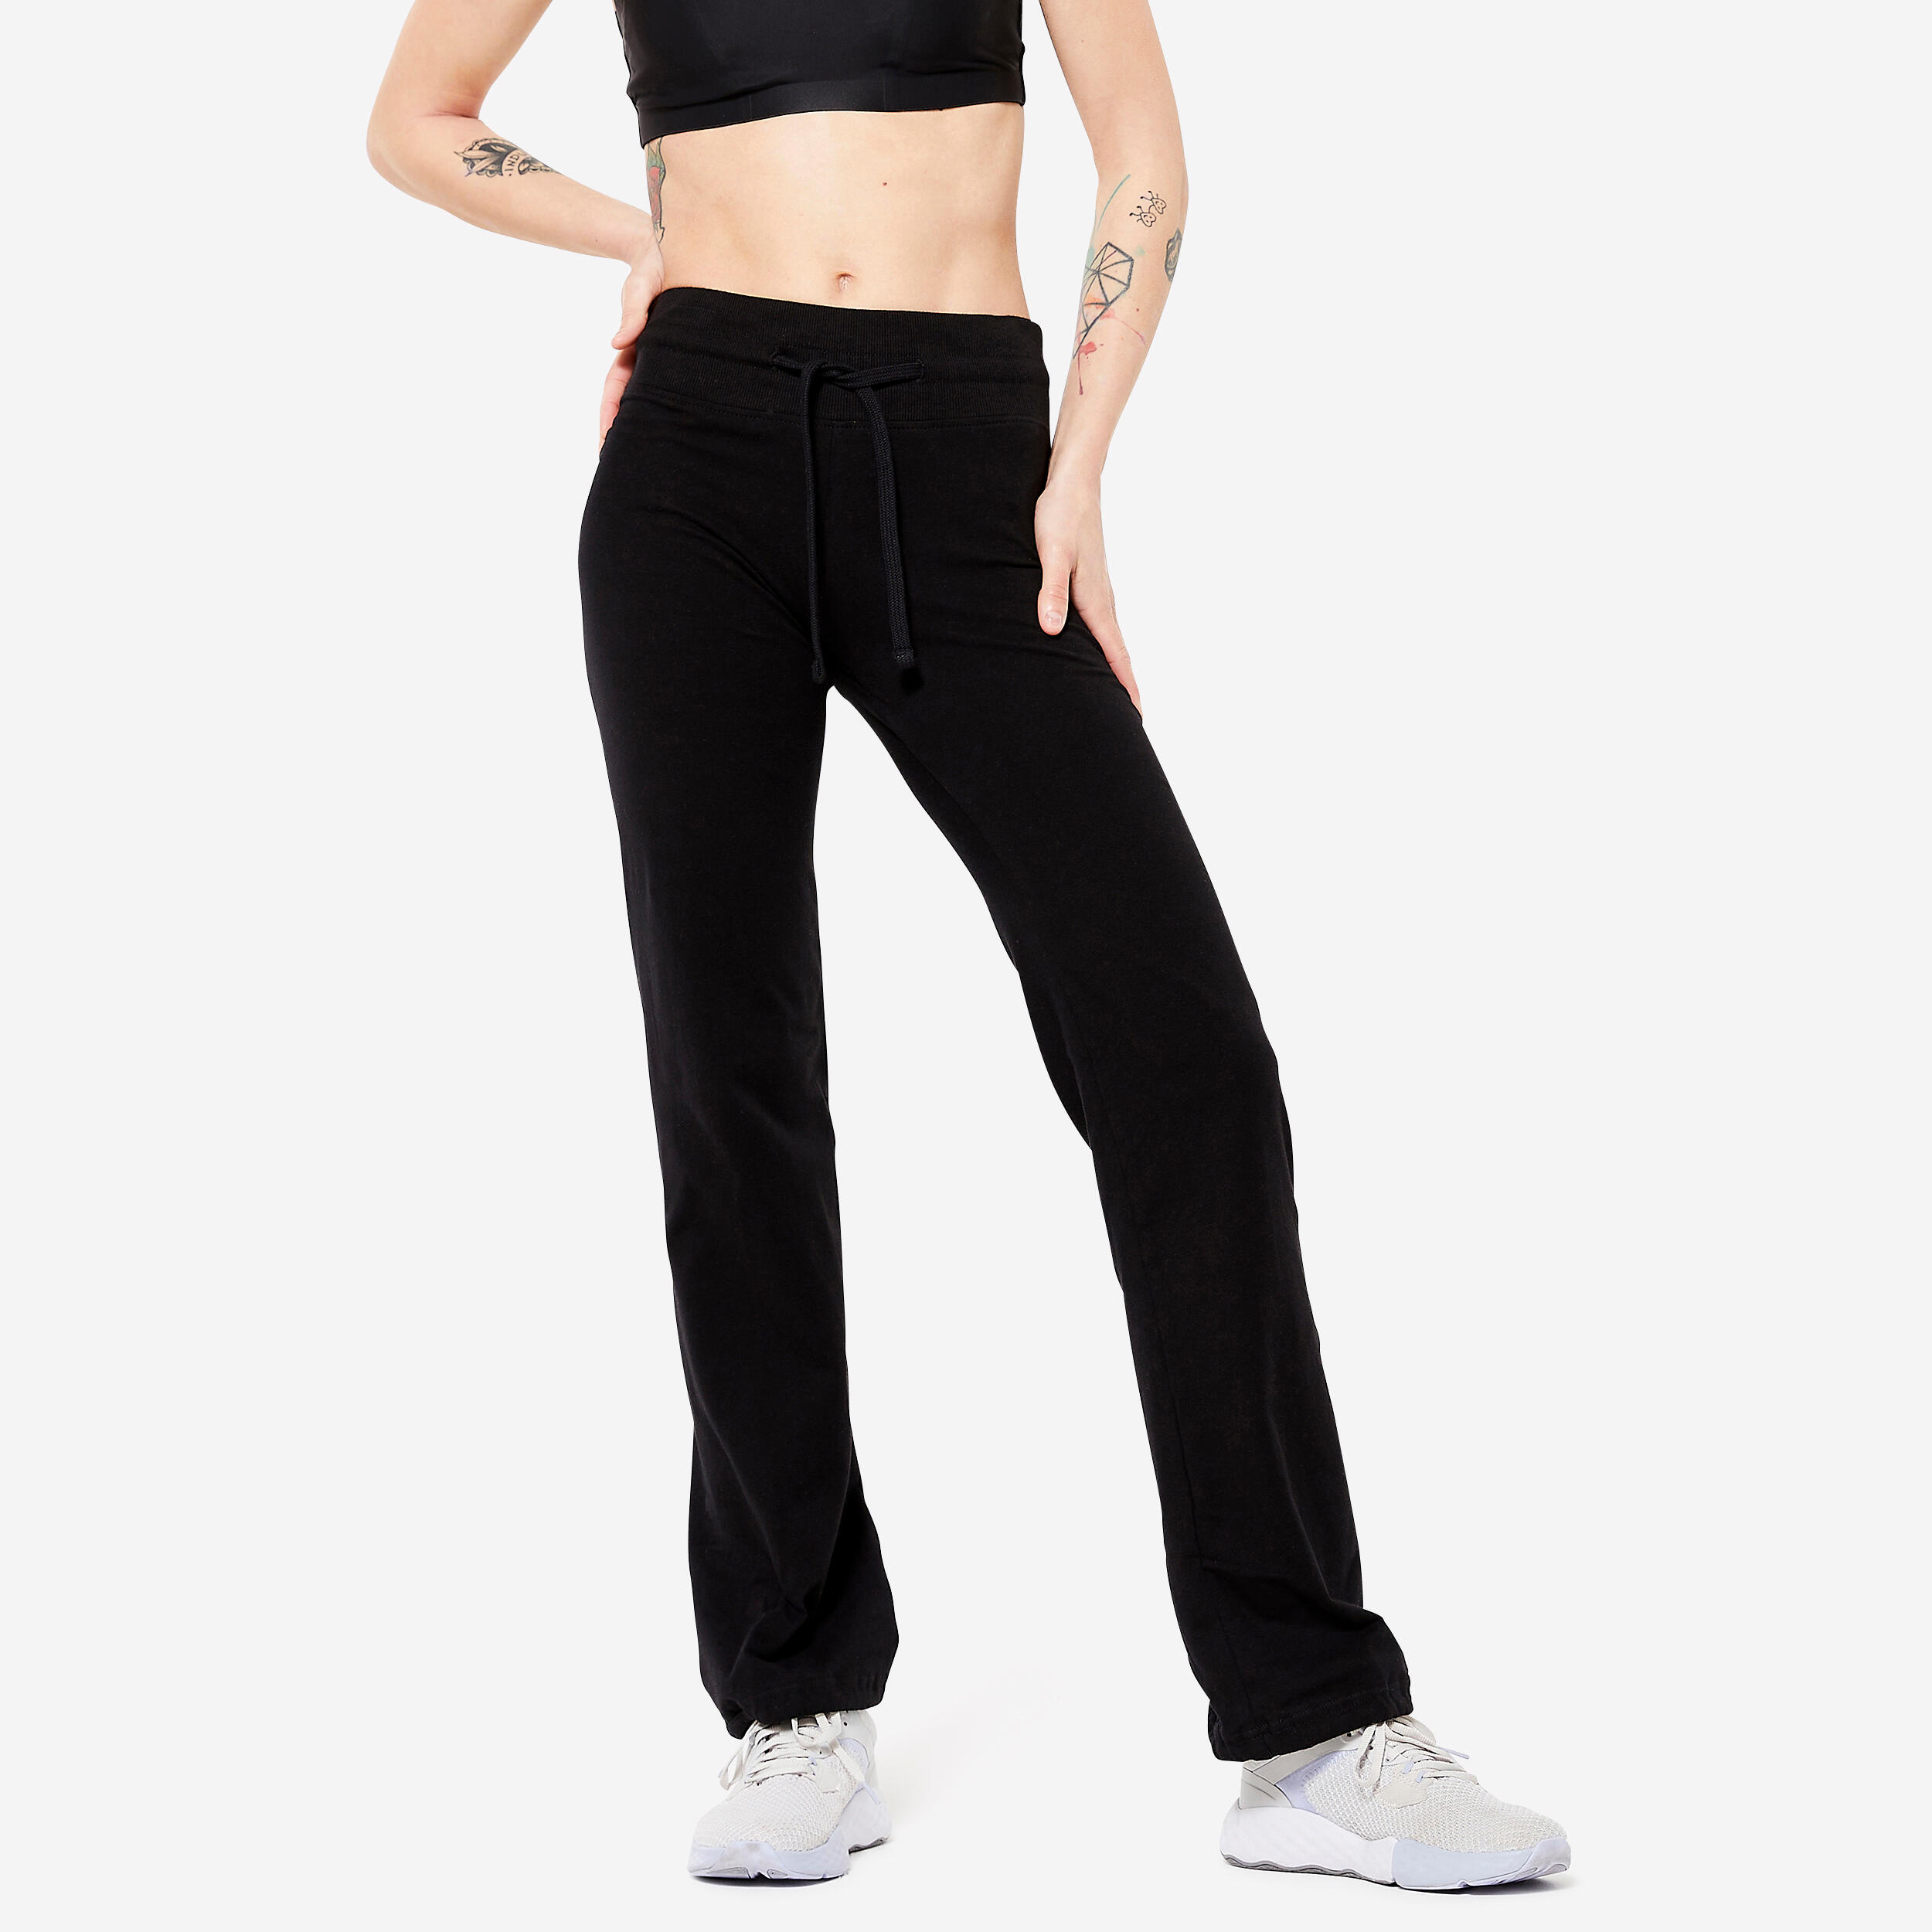 Gymshark Black Sweatpants Joggers Zip pockets Zip ankles Size